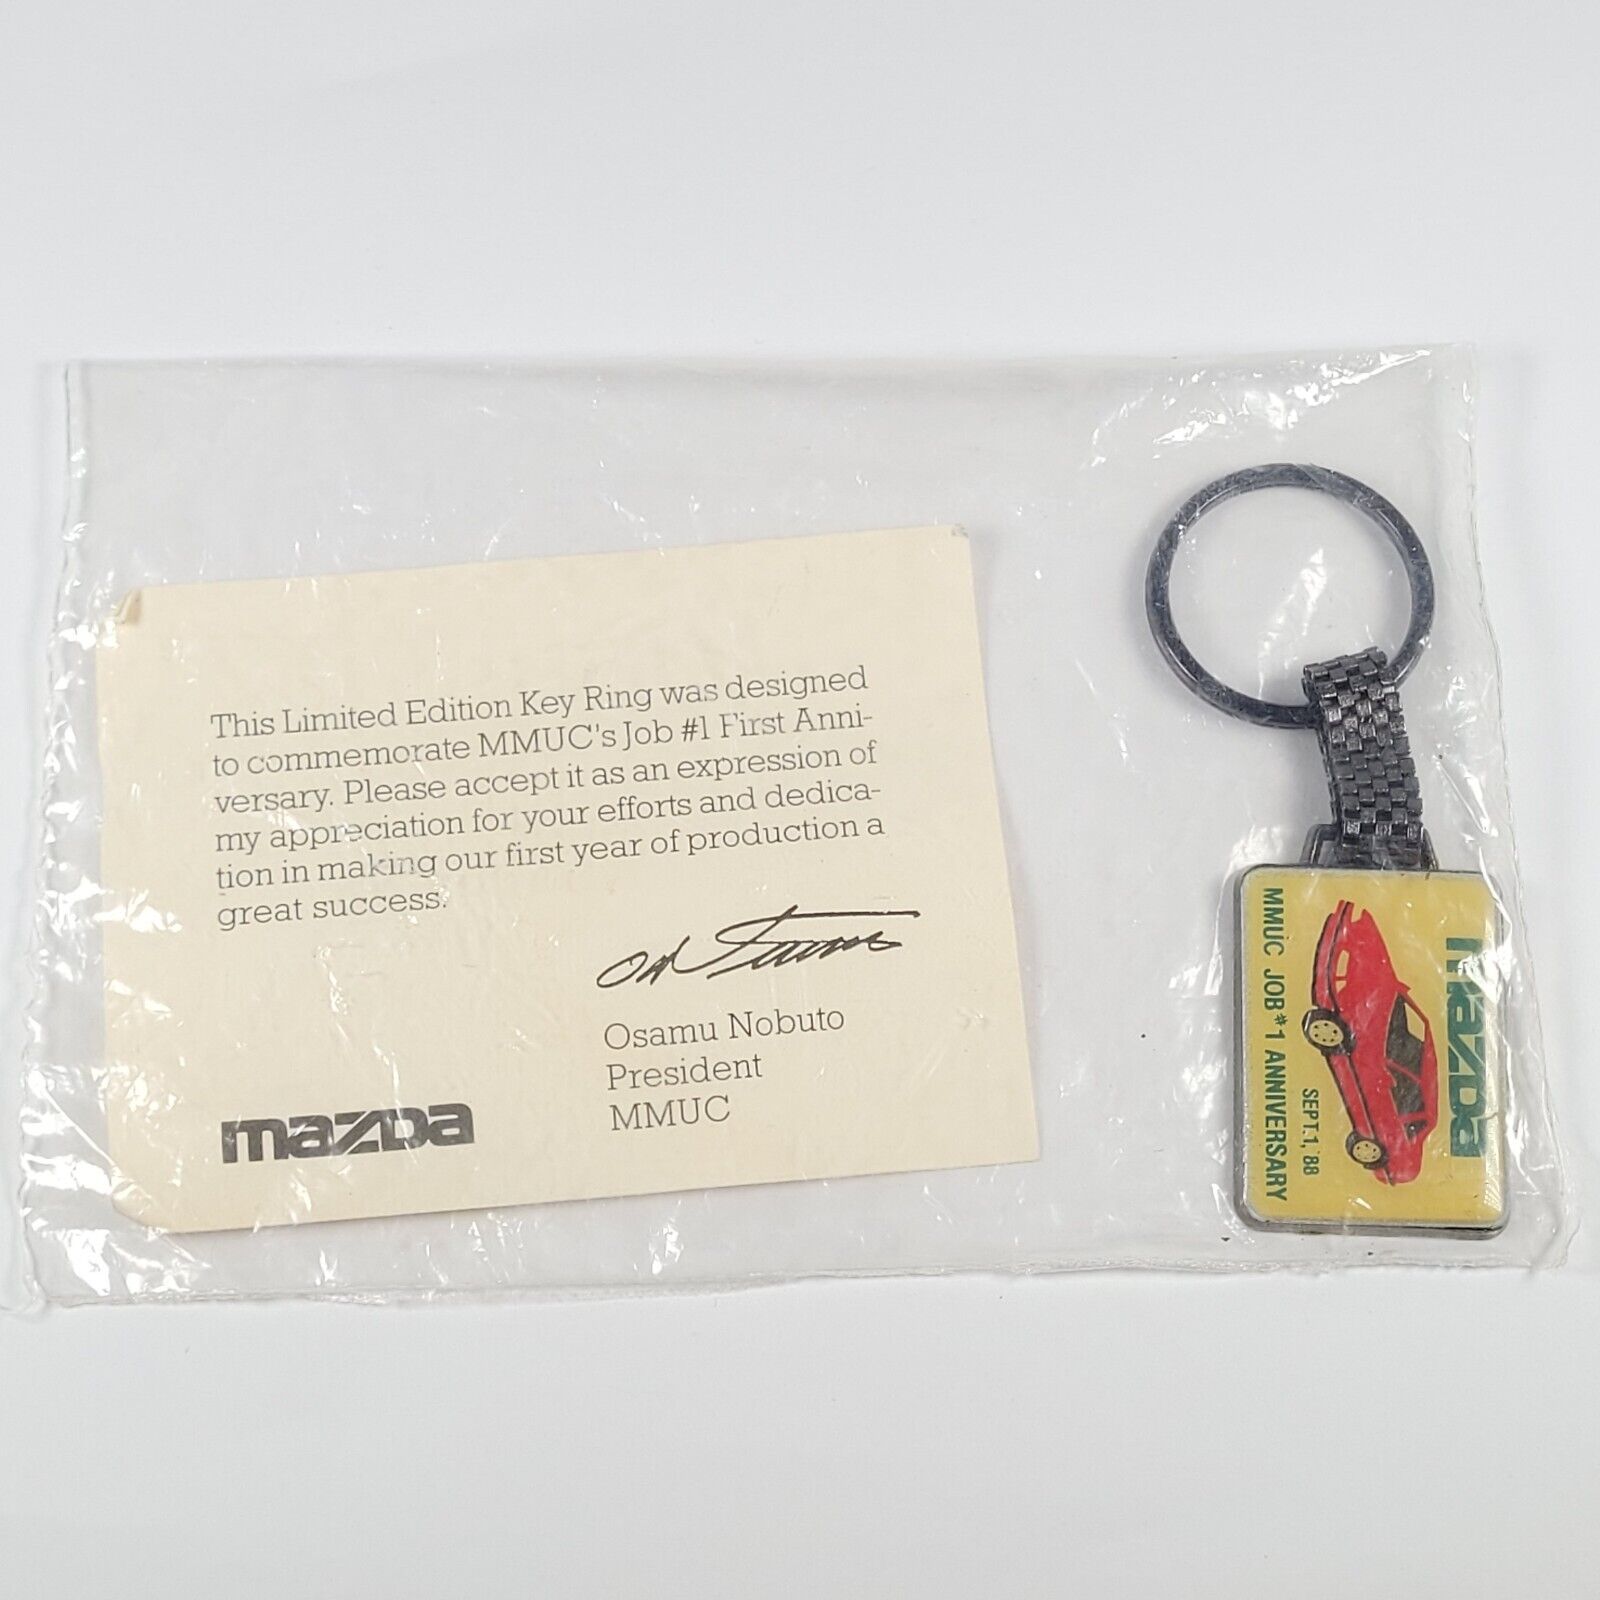 Vtg Mazda Keychain Limited Edition MMUC Job #1 Anniversary 1988 Sealed w Note 